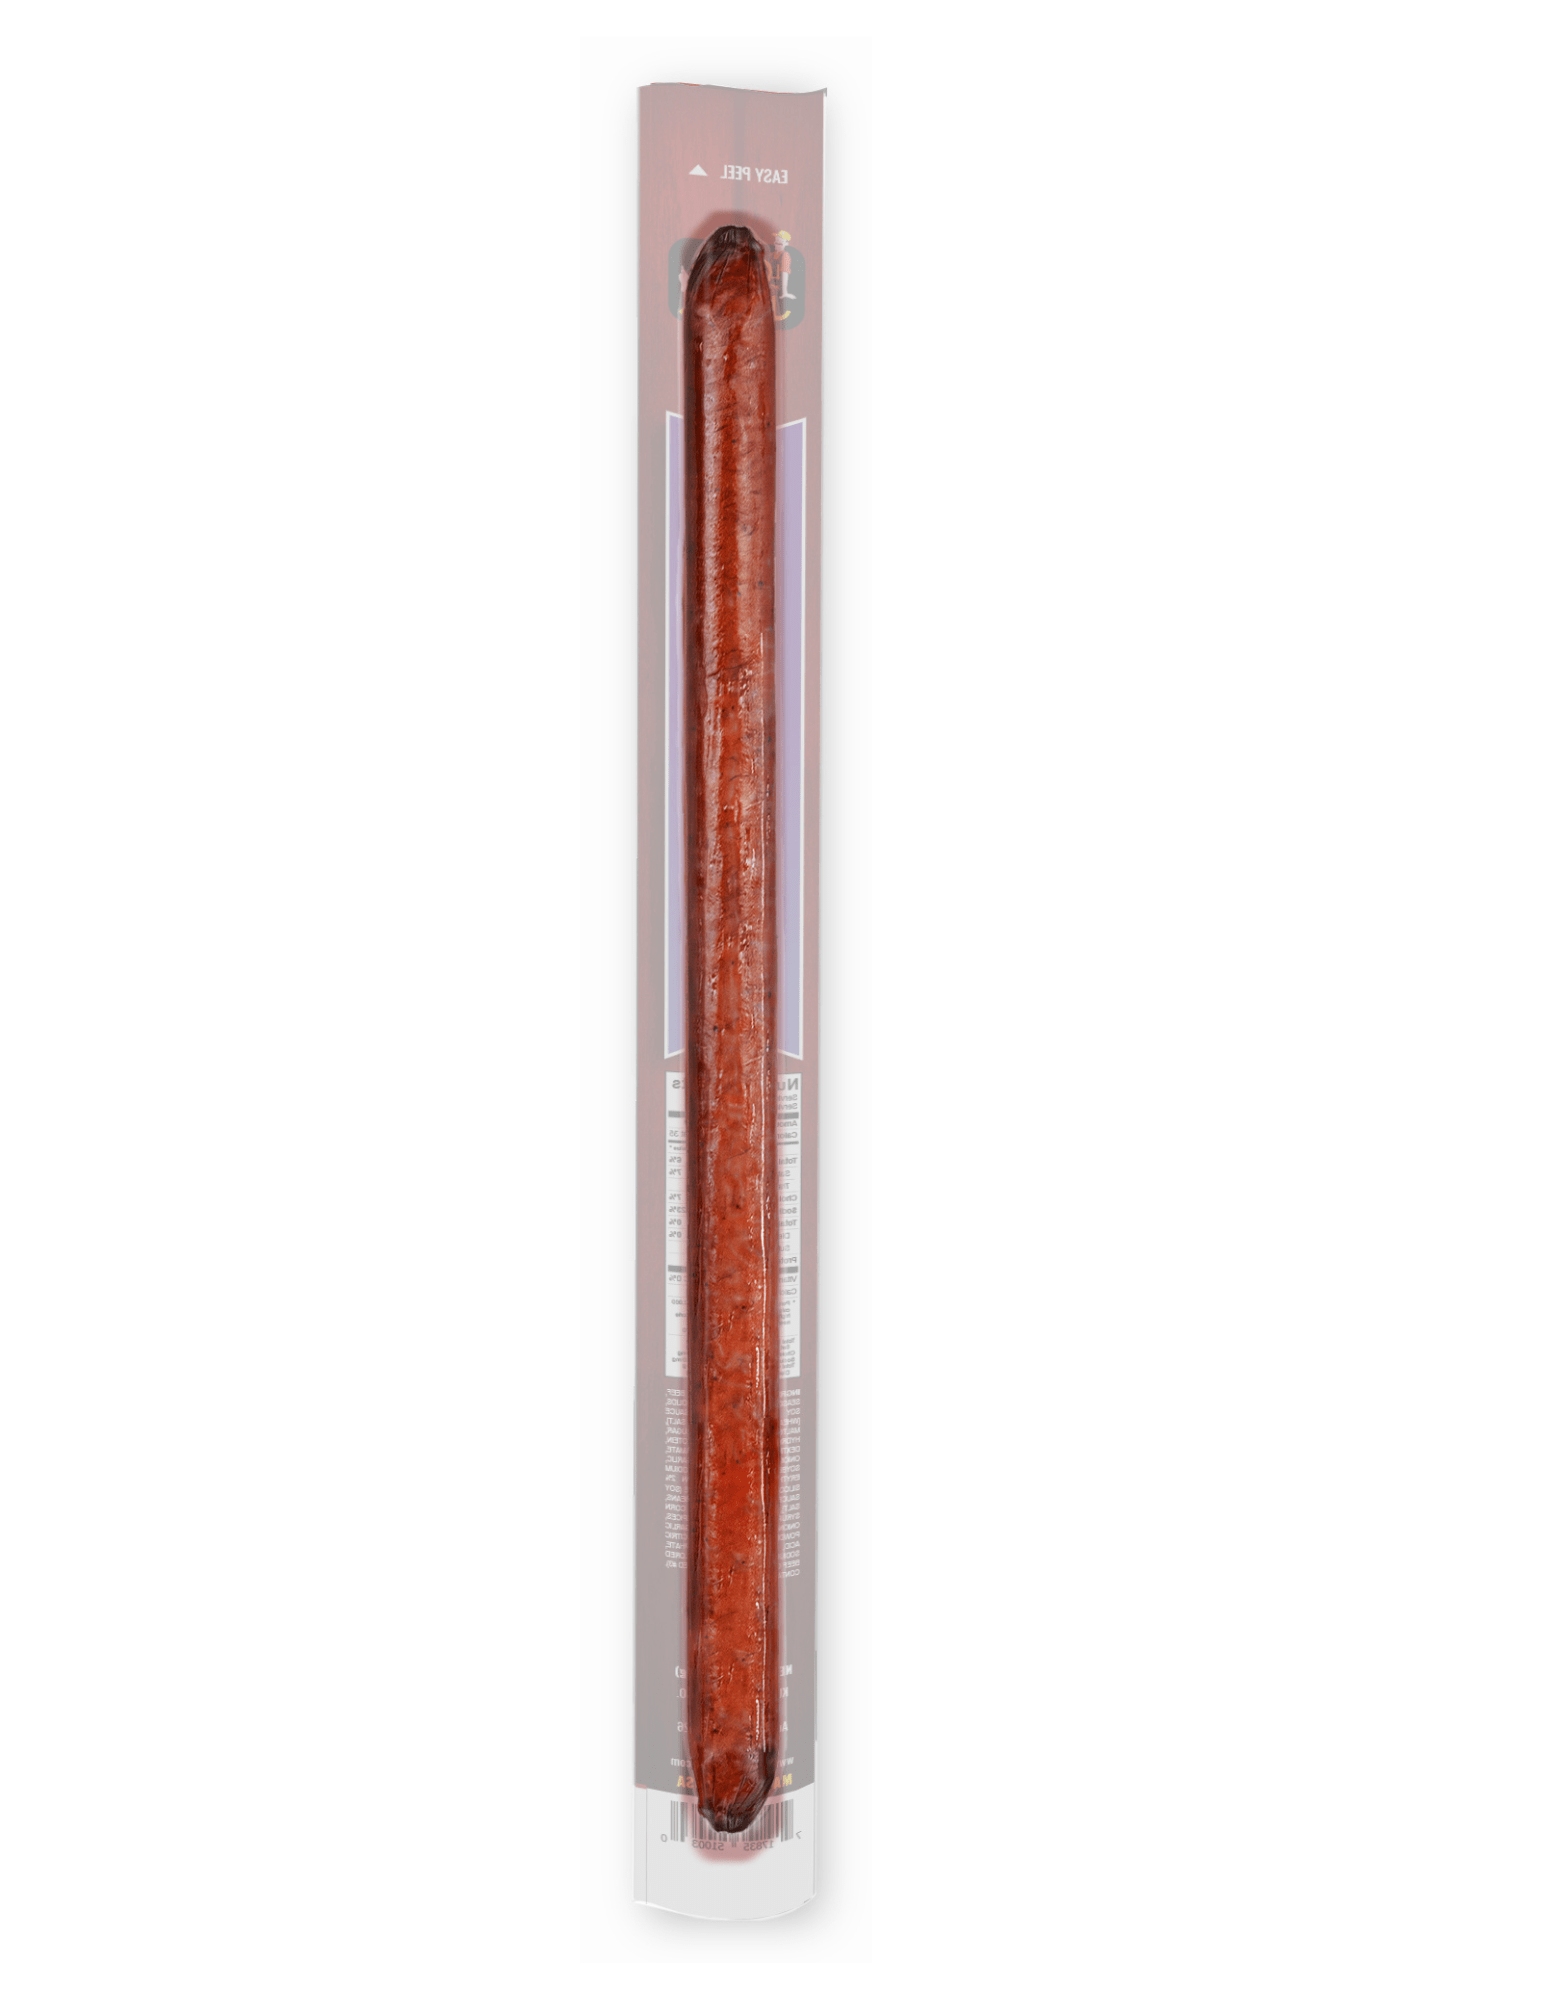 Load image into Gallery viewer, Teriyaki Long Boys - 3 count 1.6 oz Sticks
